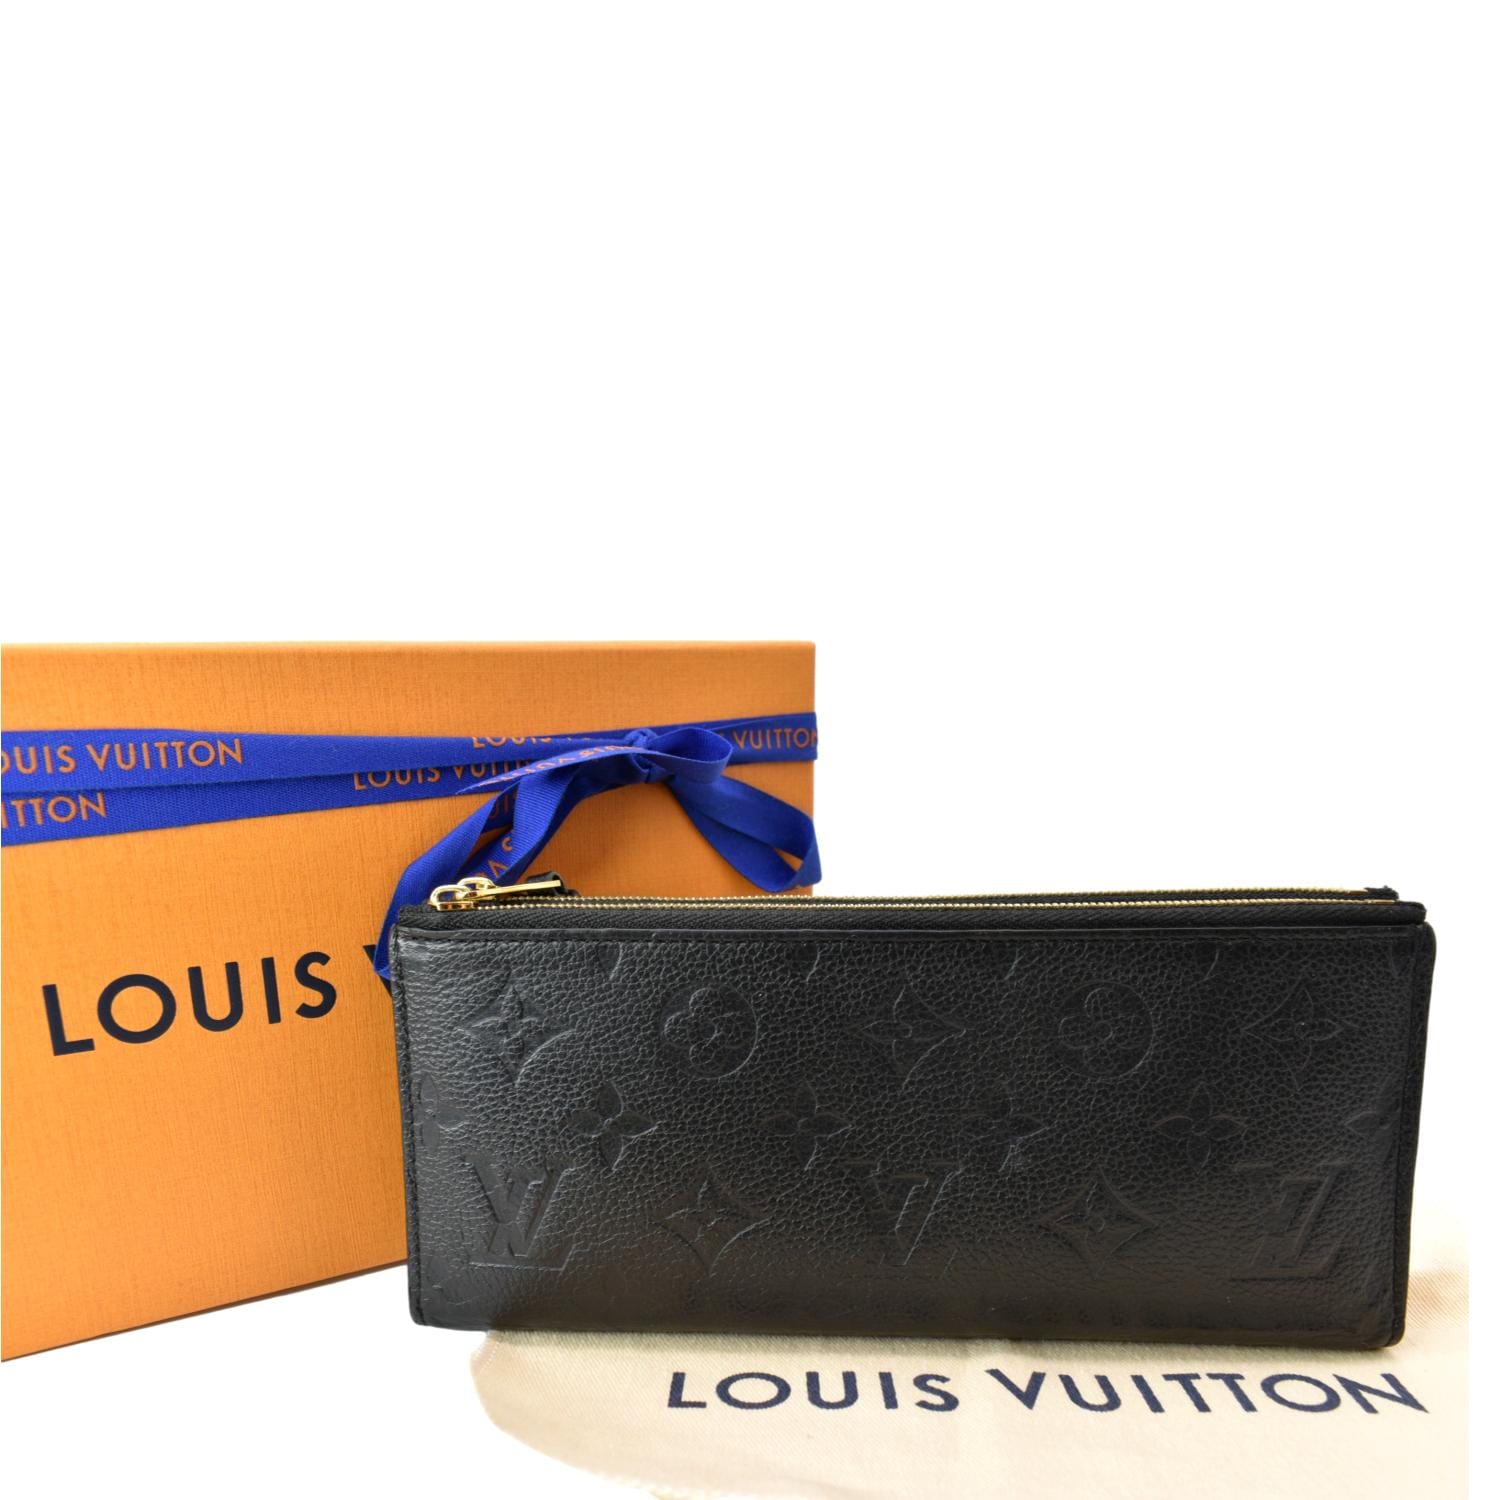 Louis Vuitton Adele Compact n Adele wallets ❤❤❤